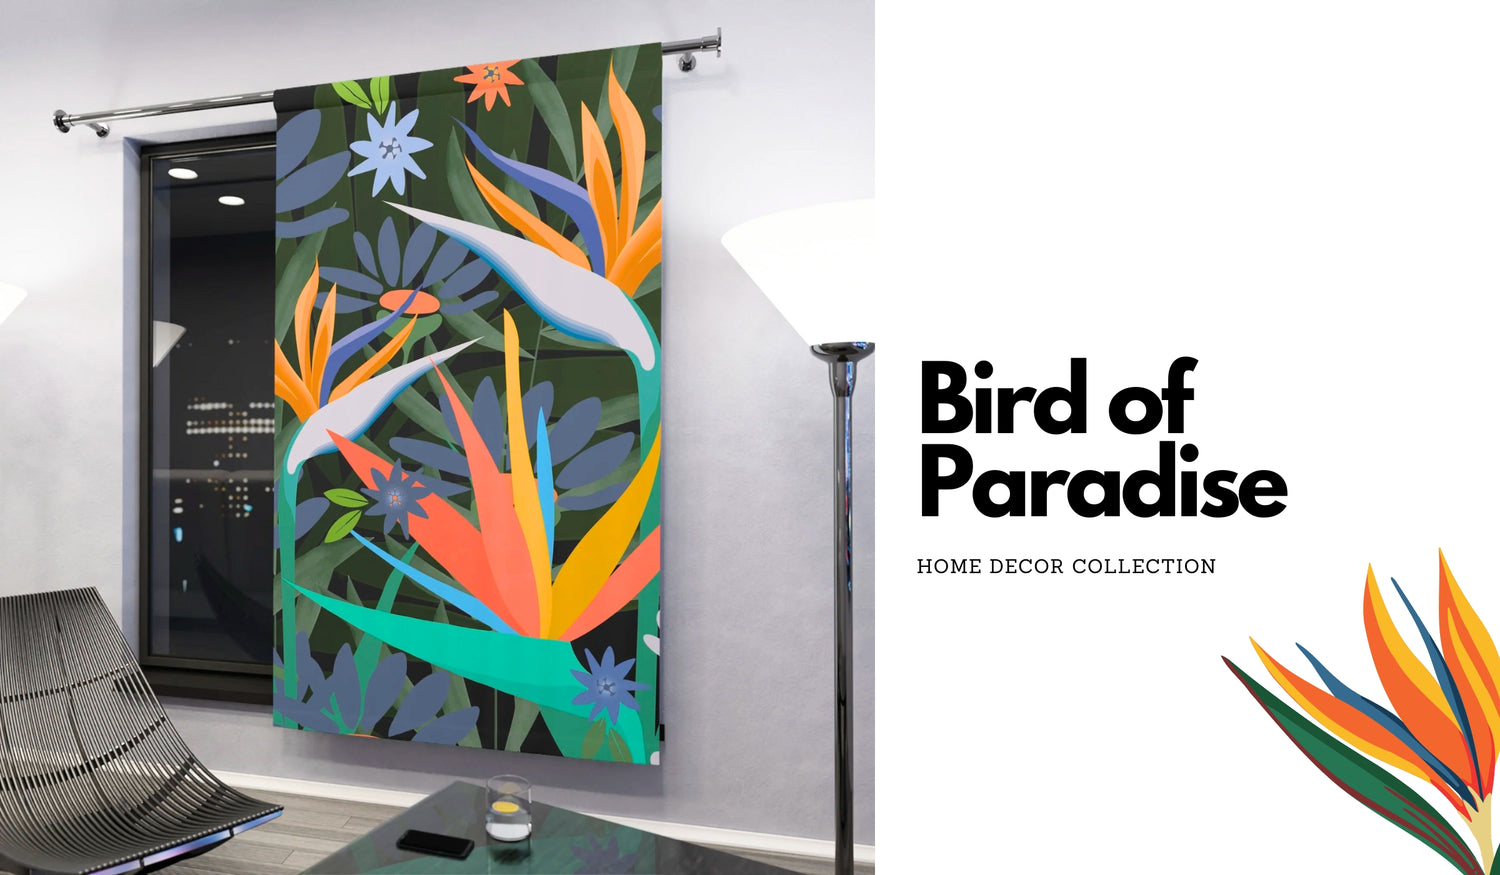 Bird of Paradise Home Decor Collection - The Landing World Hawaii